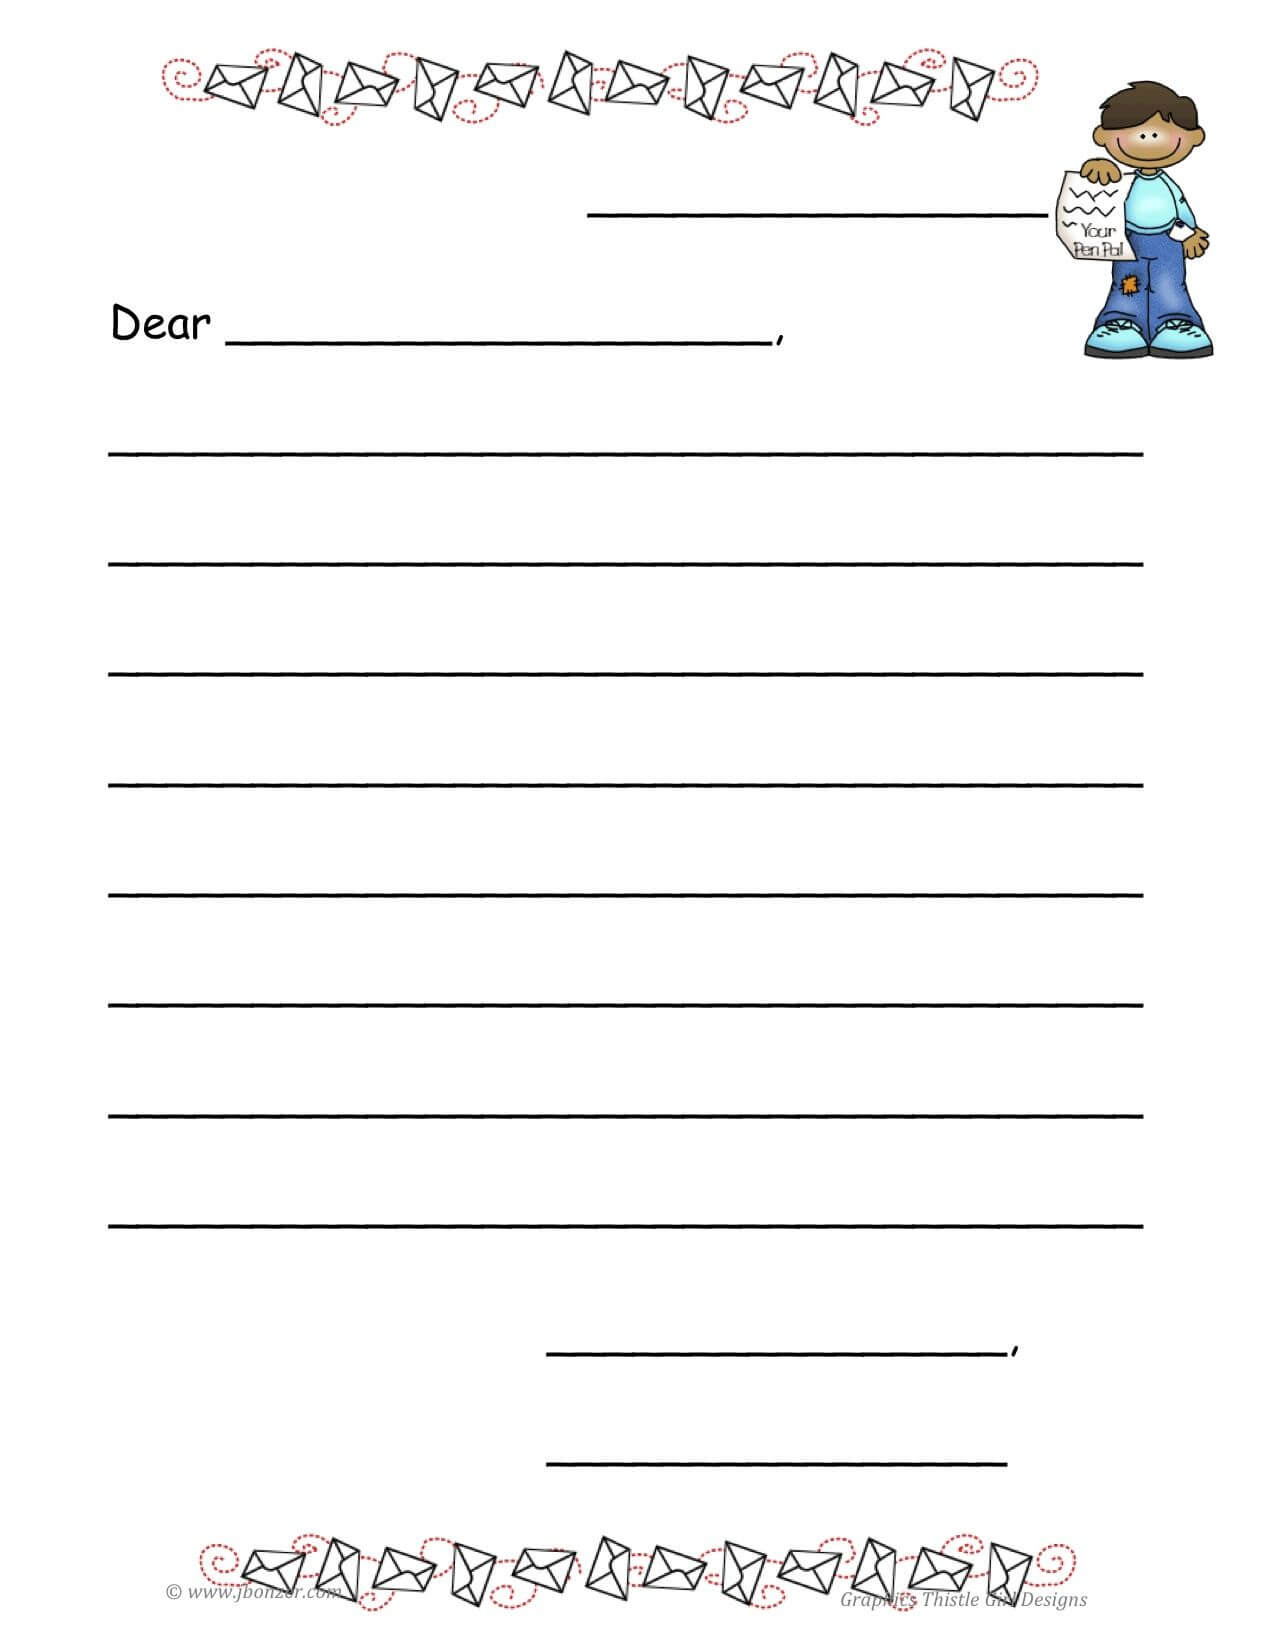 Blank+Friendly+Letter+Template | Letter Writing | Letter Regarding Blank Letter Writing Template For Kids